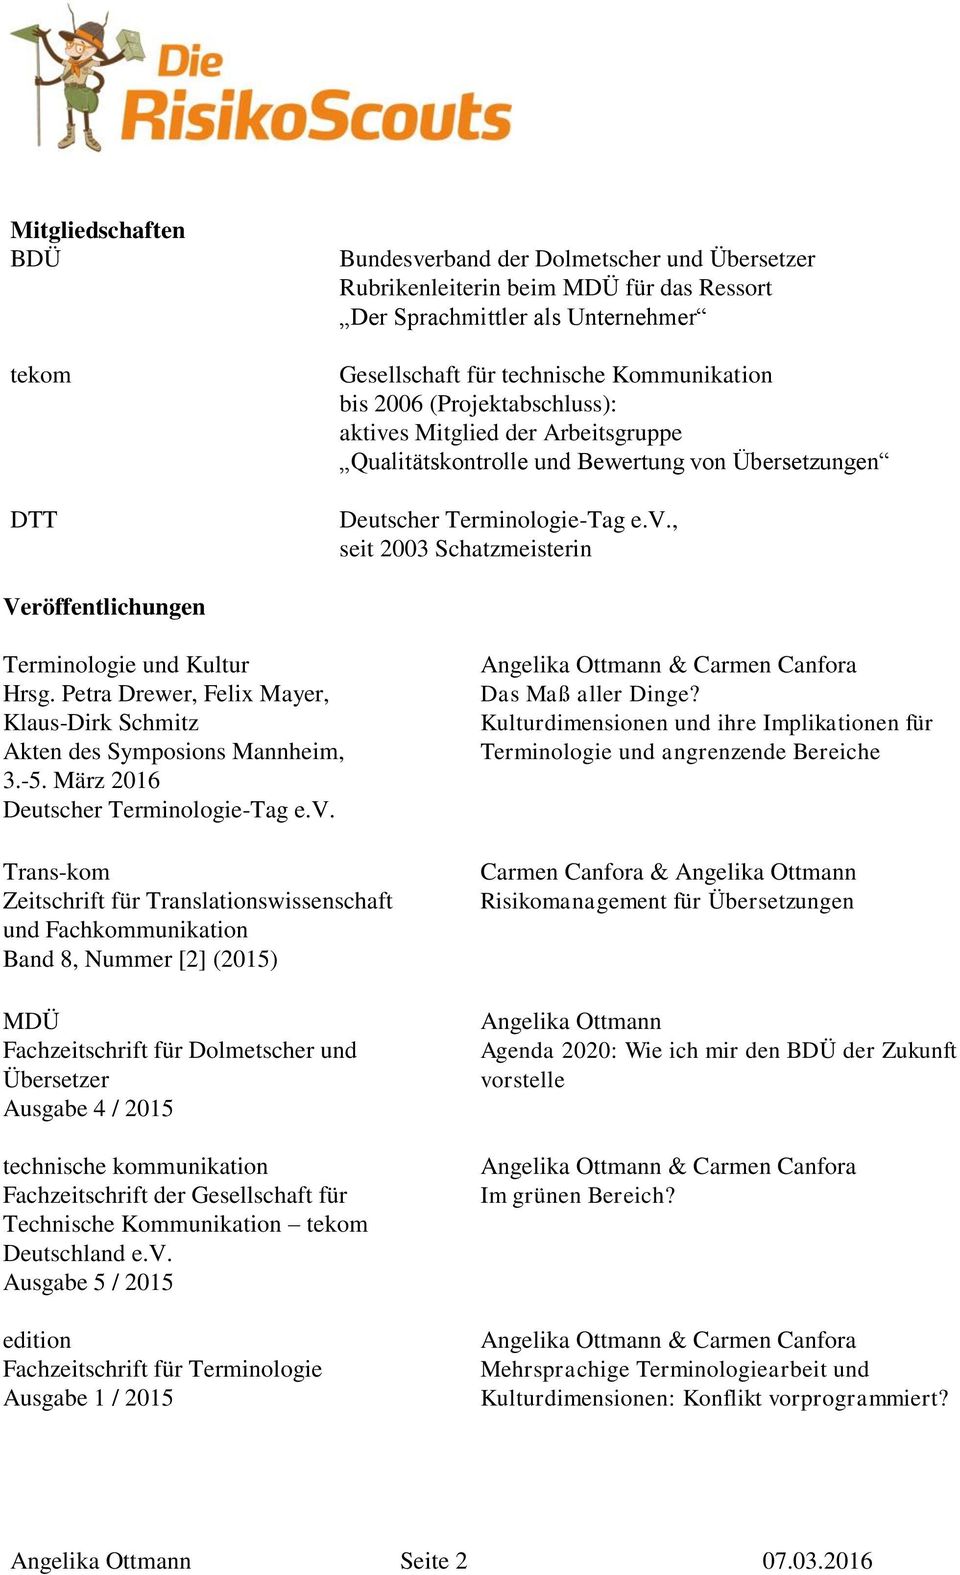 Petra Drewer, Felix Mayer, Klaus-Dirk Schmitz Akten des Symposions Mannheim, 3.-5. März 2016 Deutscher Terminologie-Tag e.v.